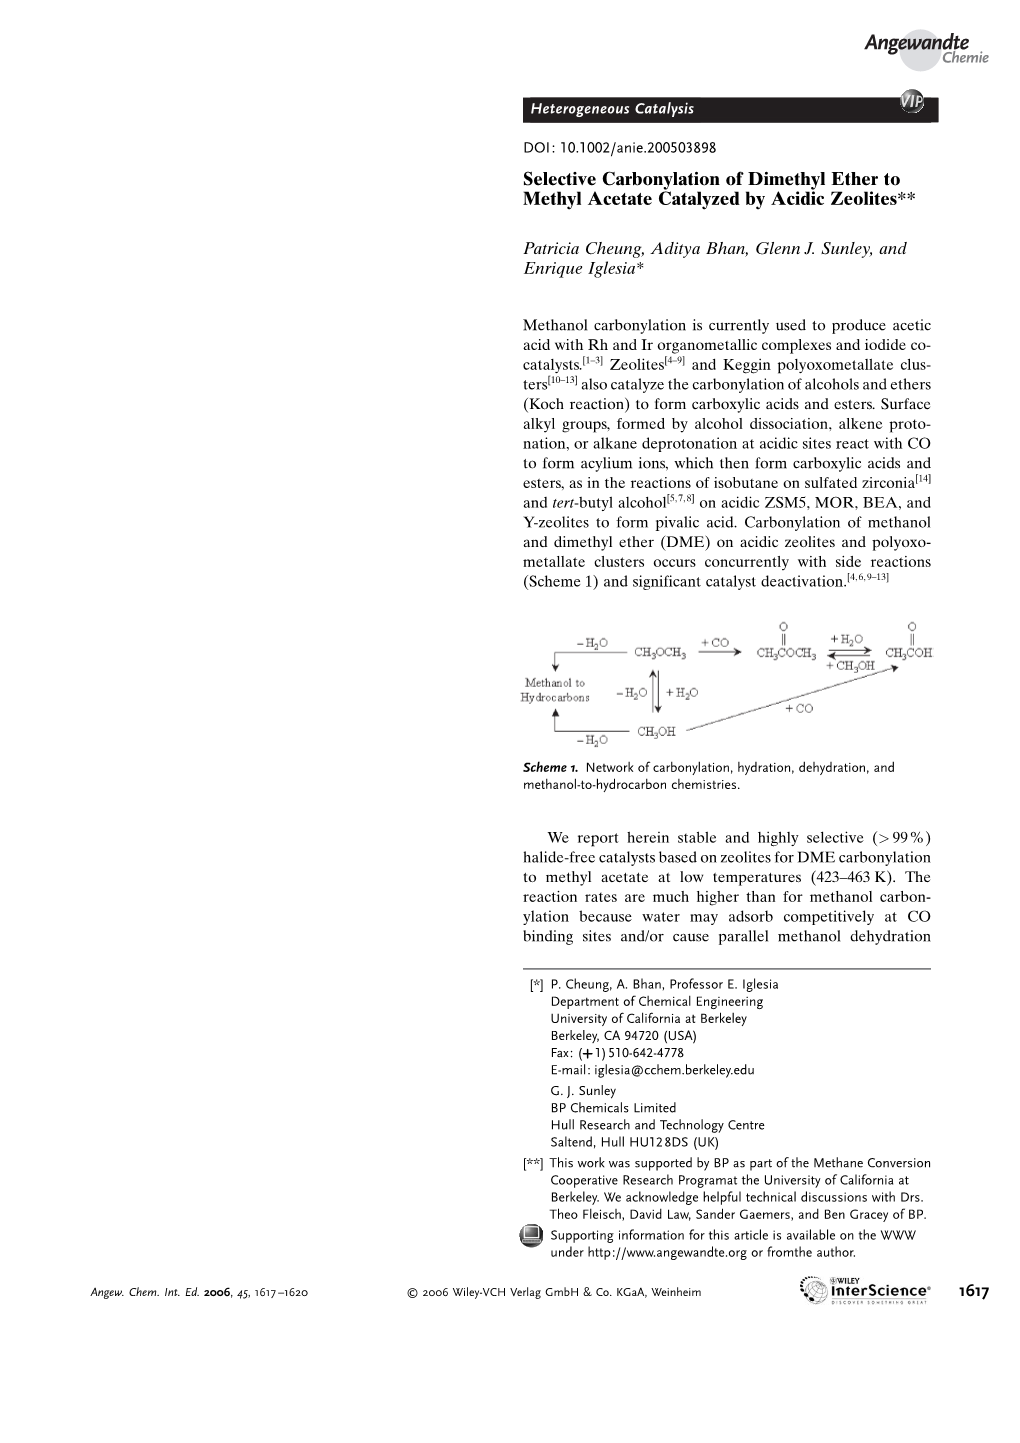 Selective Carbonylation of Dimethyl Ether to Methyl Acetate Catalyzed by Acidic Zeolites**